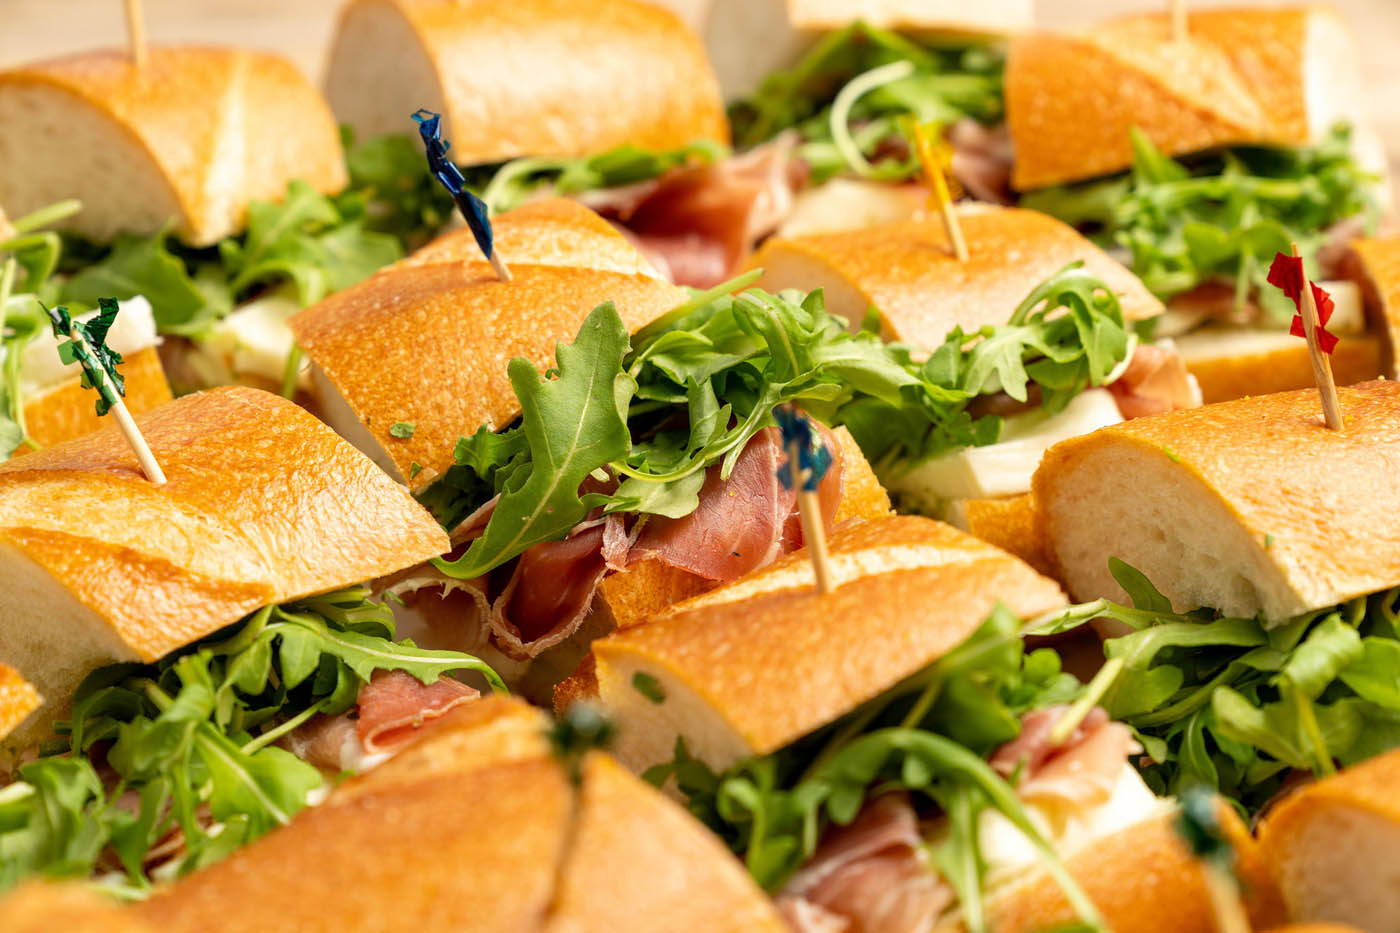 Prosciutto and mozzarella cheese sandwiches at The Real Food Academy Miami.